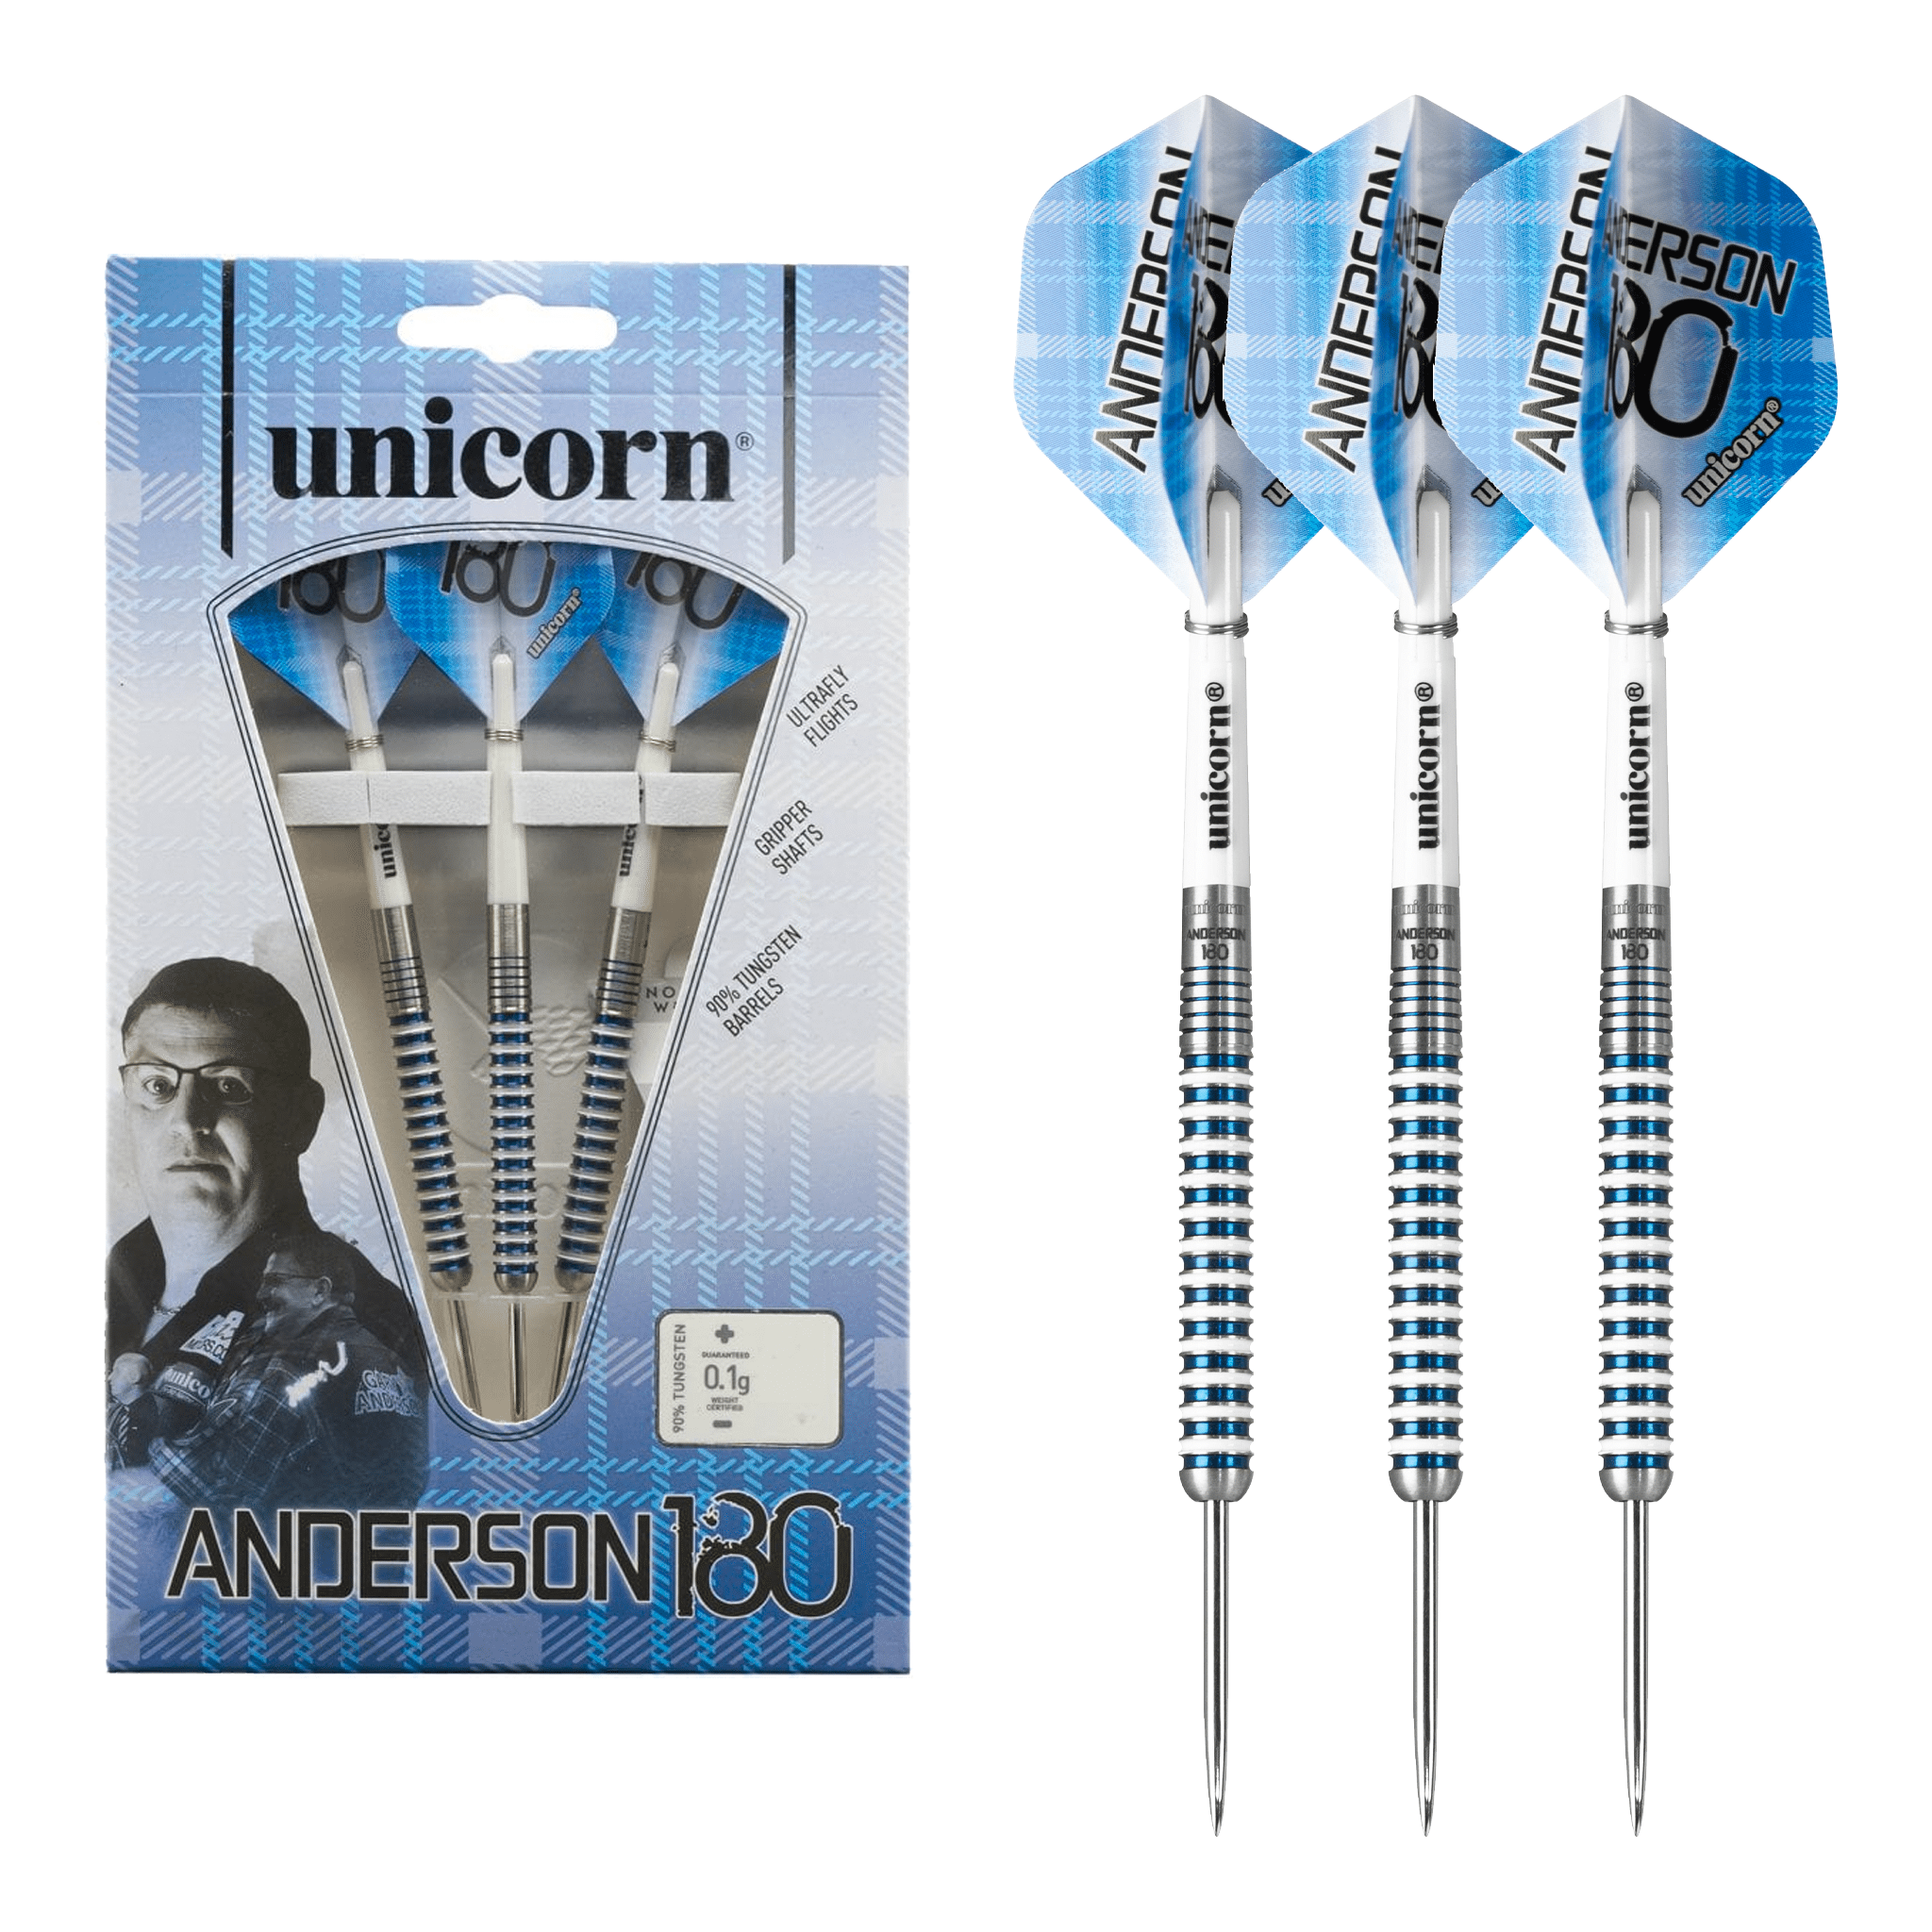 Unicorn Gary Anderson 180 Steel Tip Darts - 90% Tungsten - 23 Grams Darts